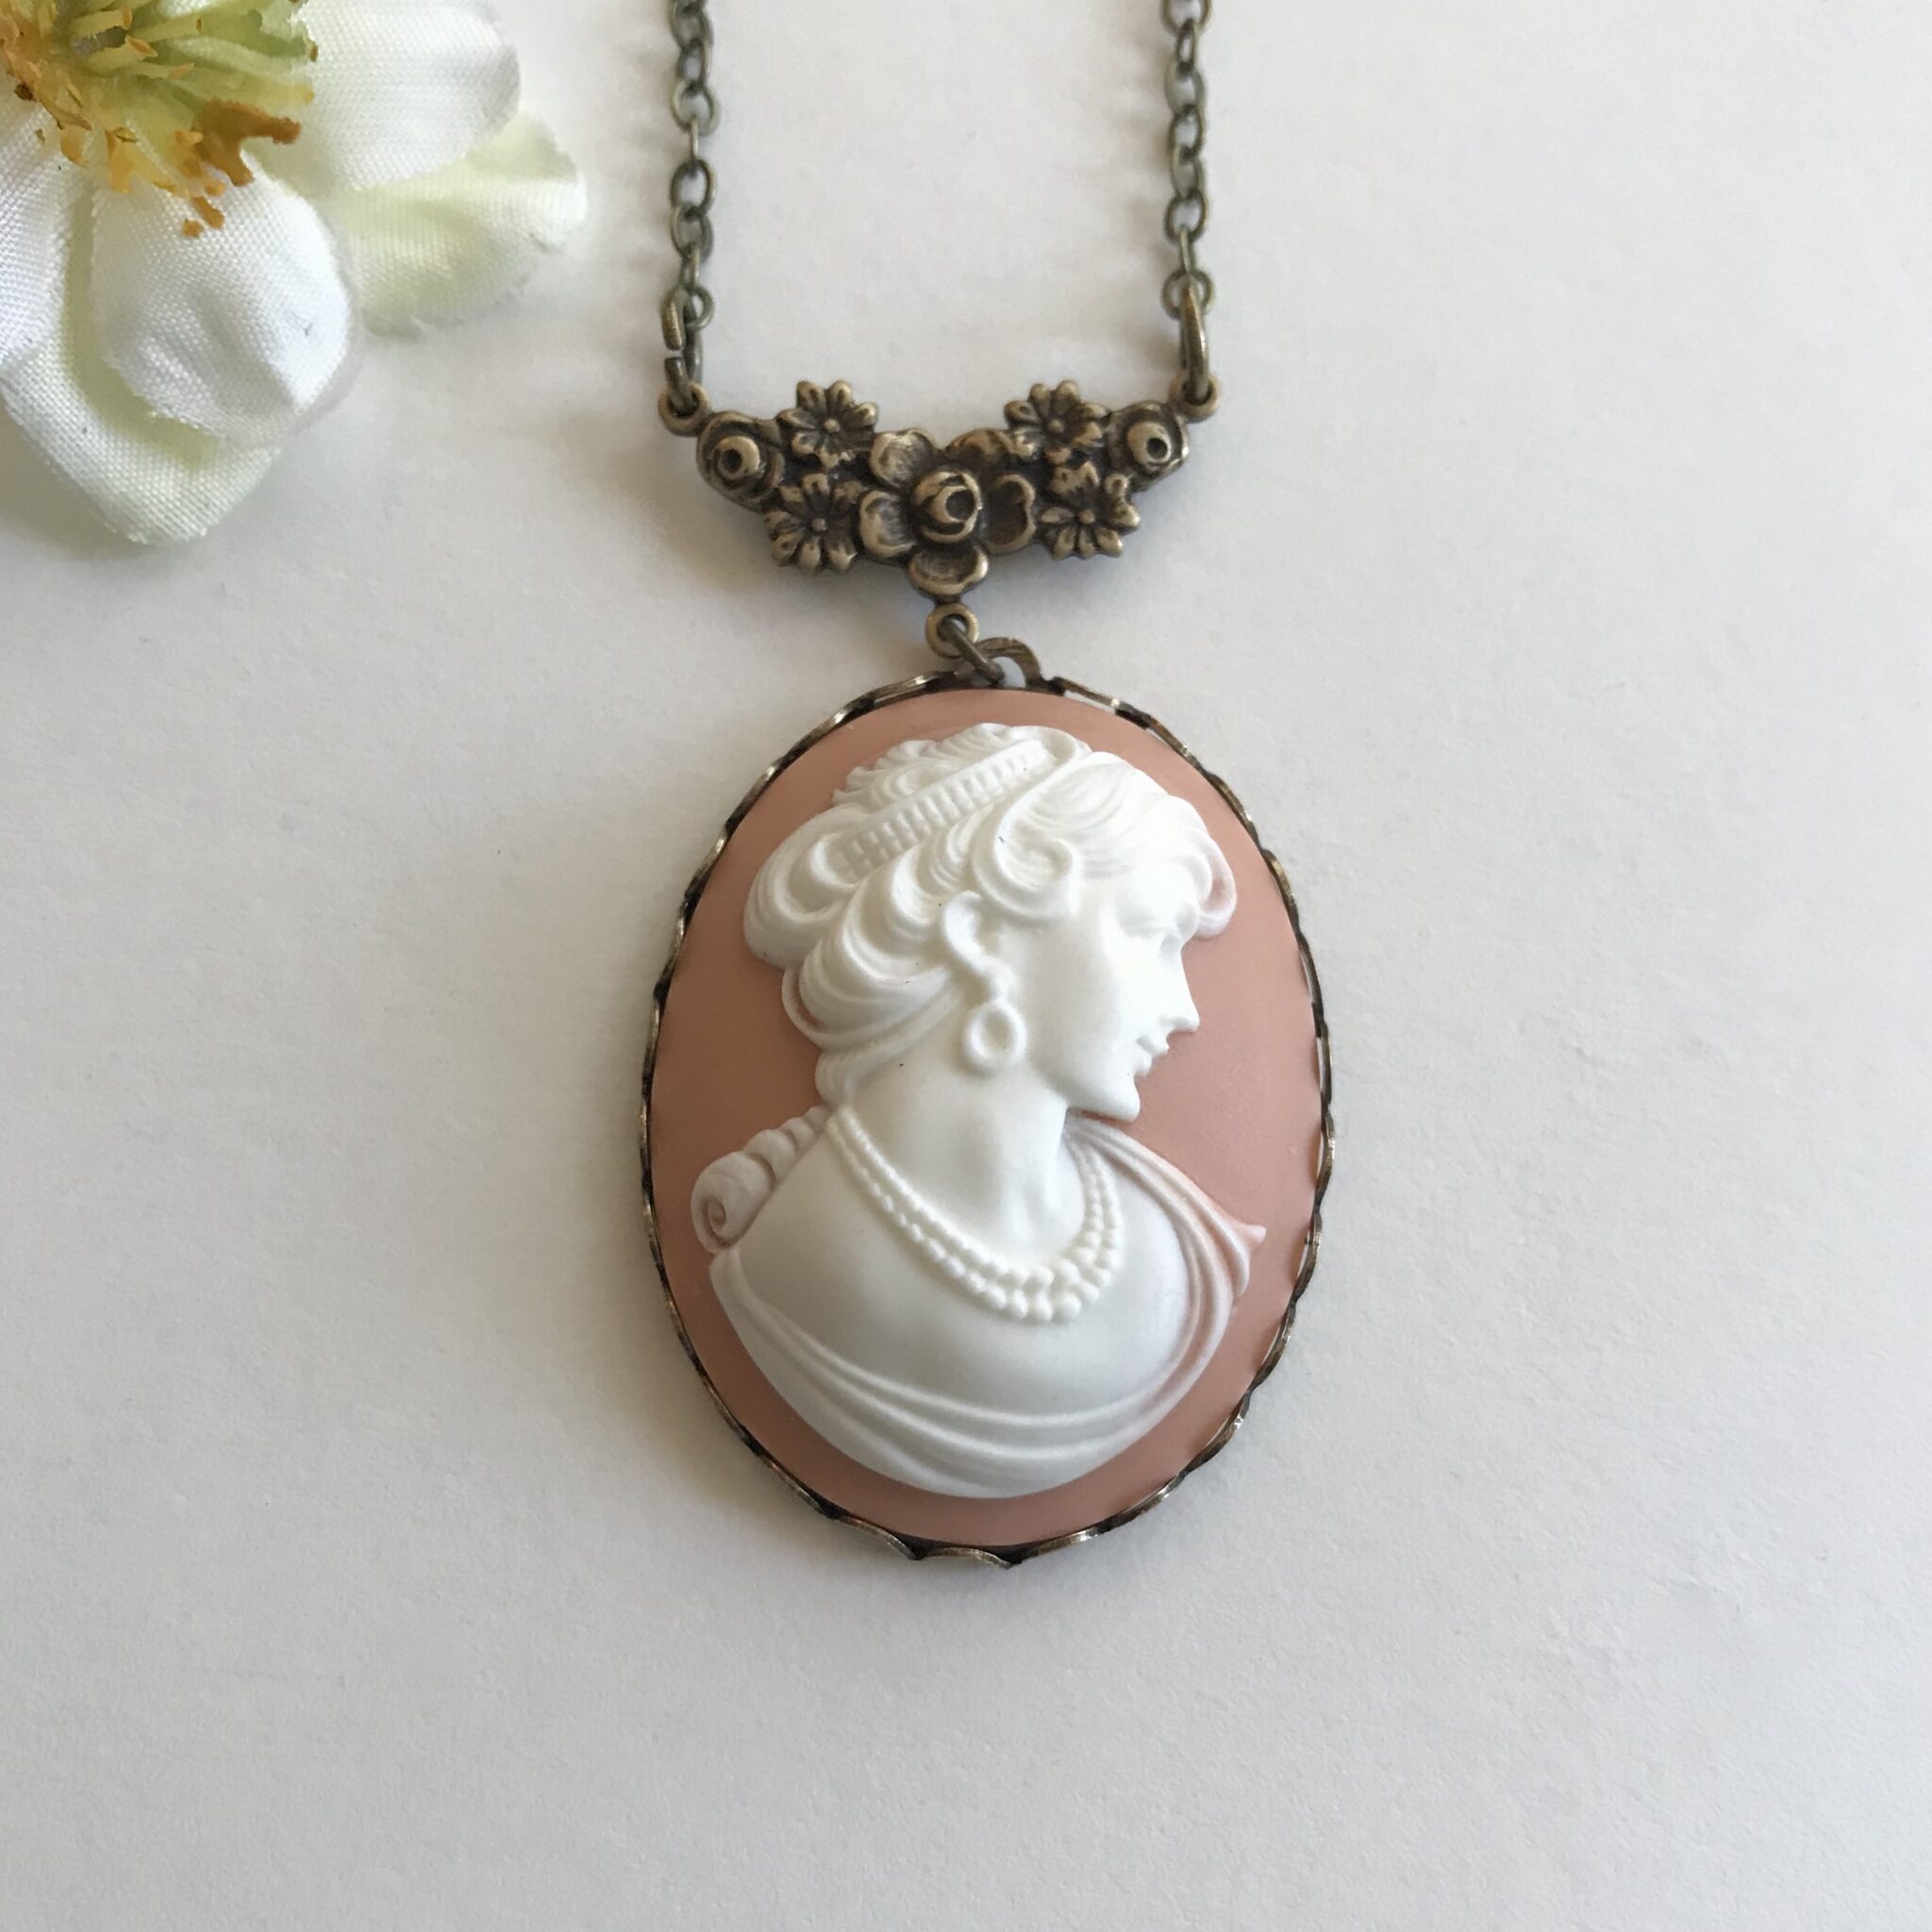 Lady cameo necklace, vintage inspired, large pendant - Botanical